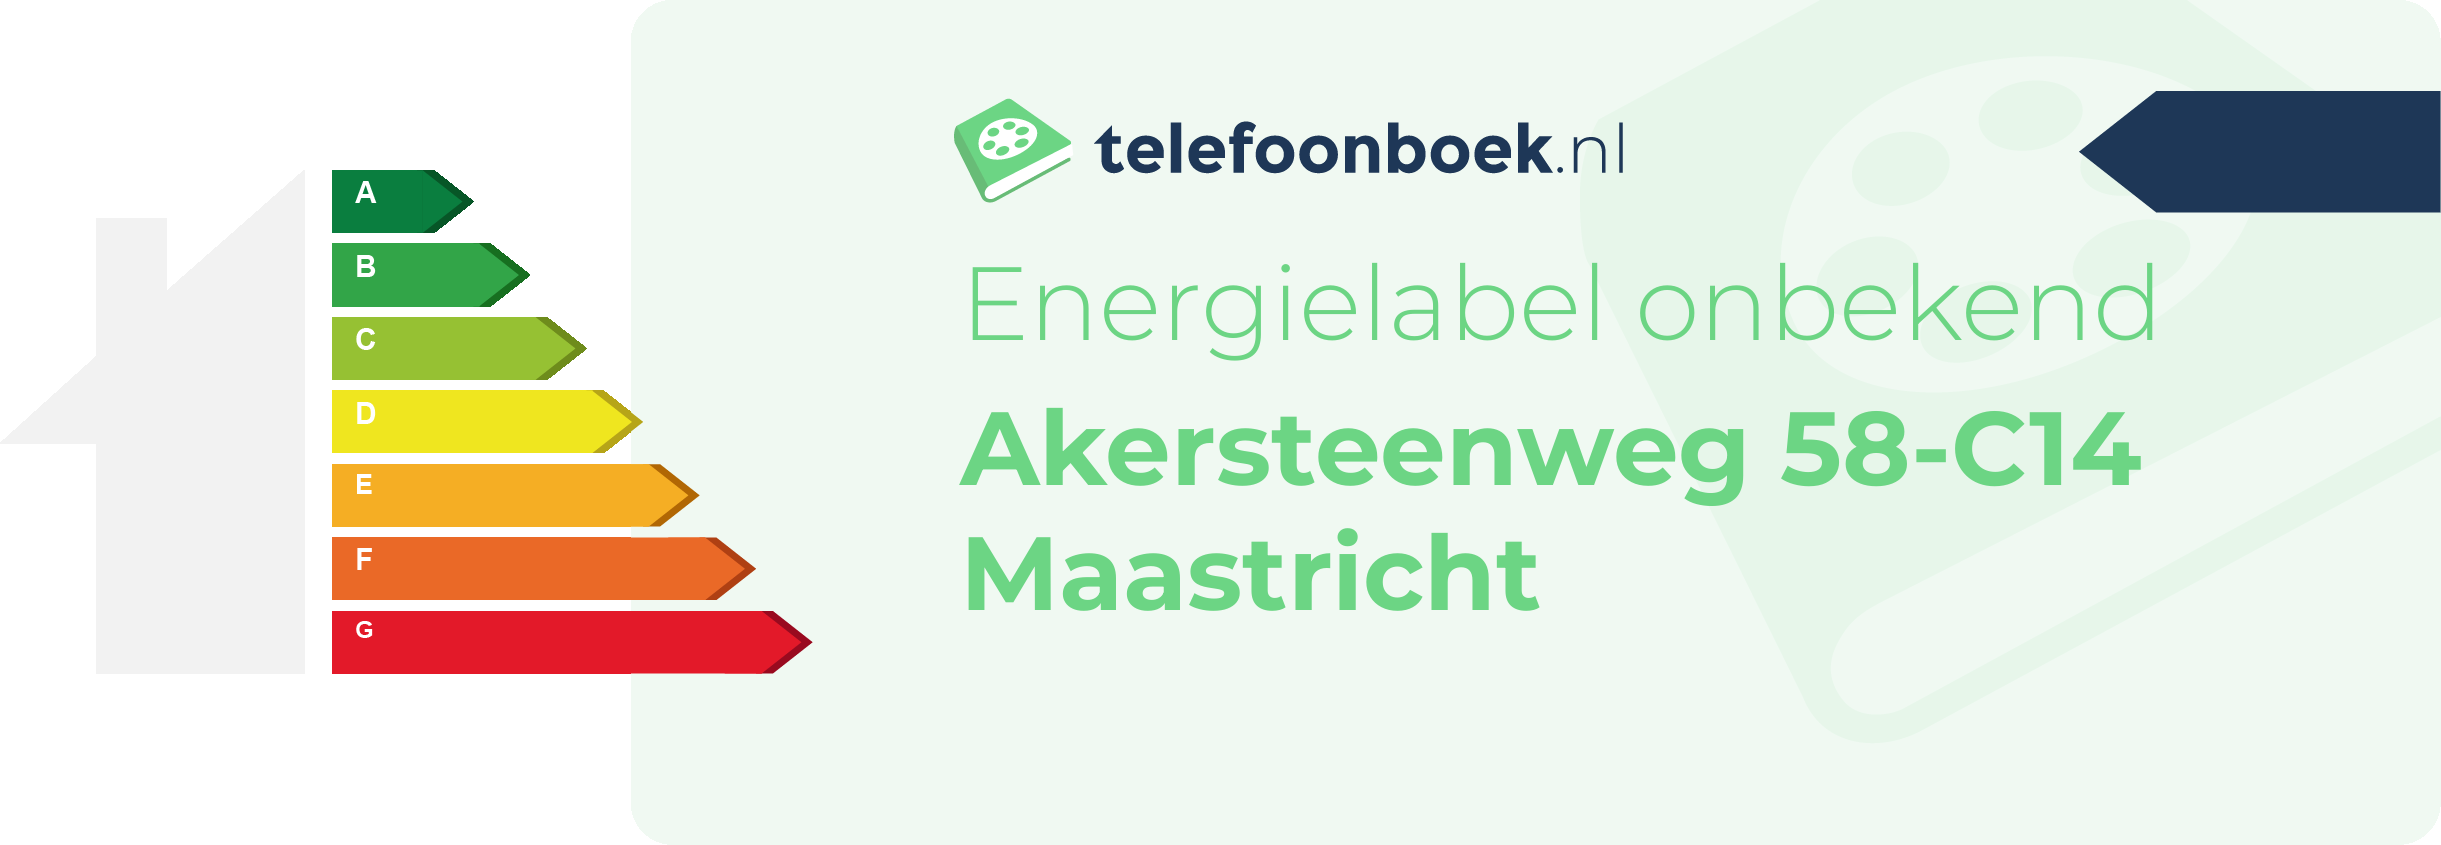 Energielabel Akersteenweg 58-C14 Maastricht